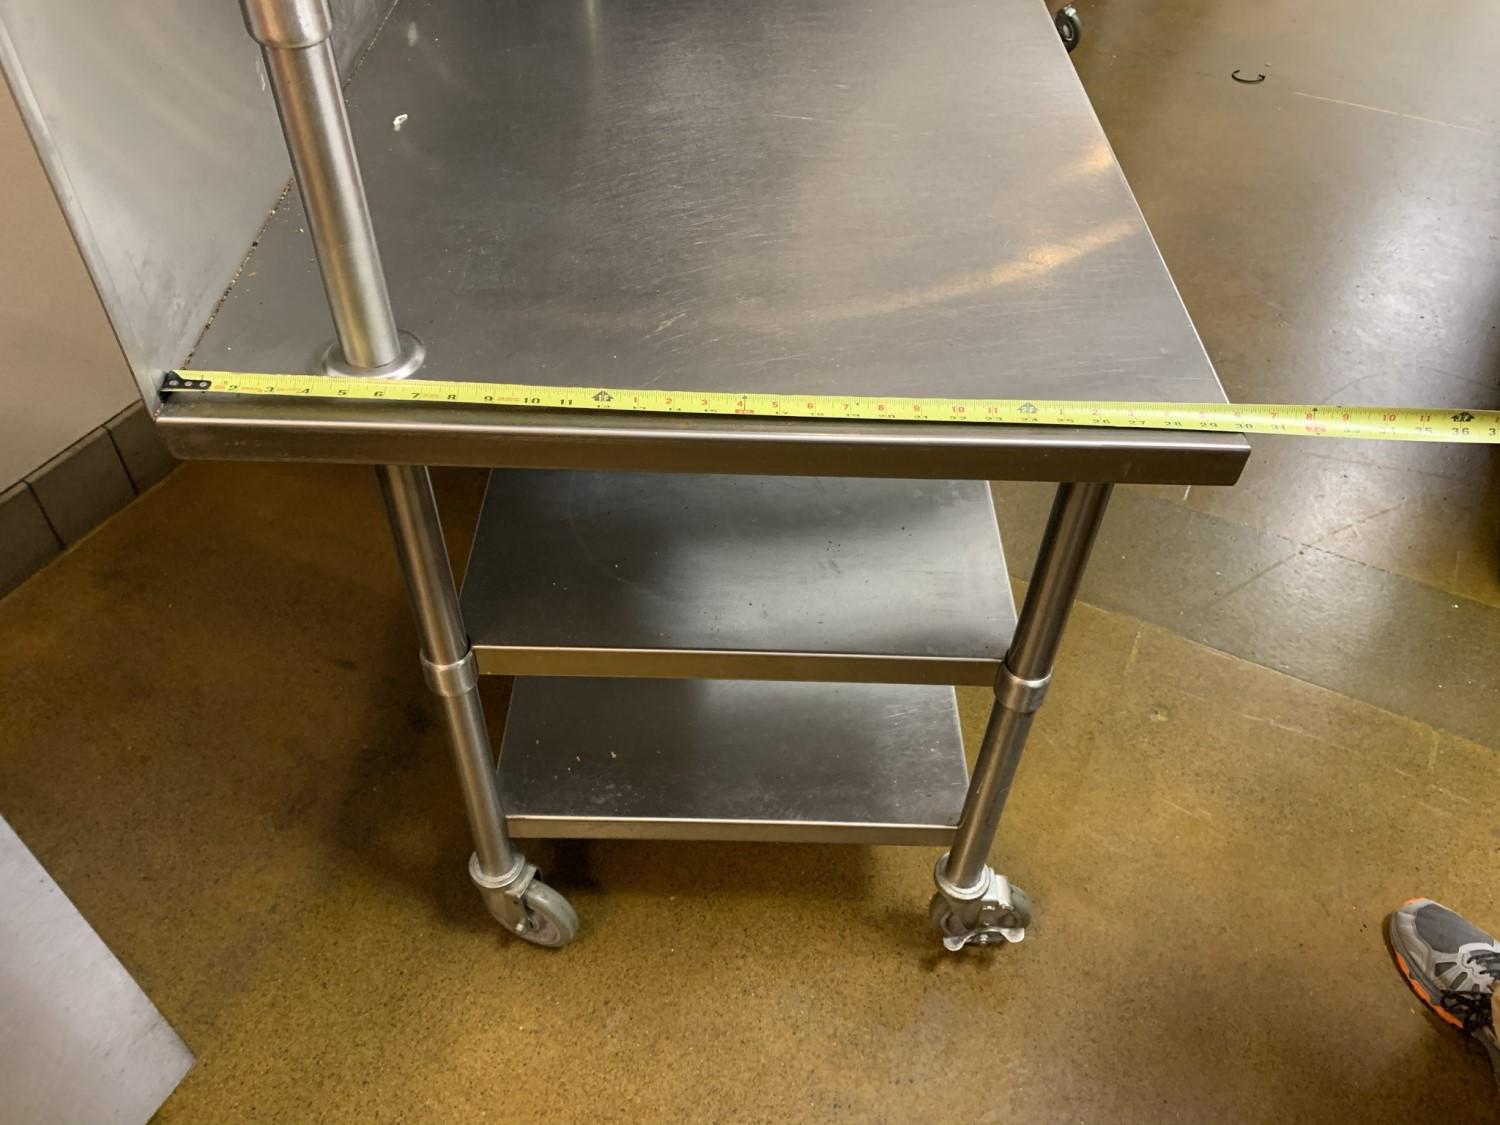 Stainless Steel Prep Table with Stainless Steel Backsplash